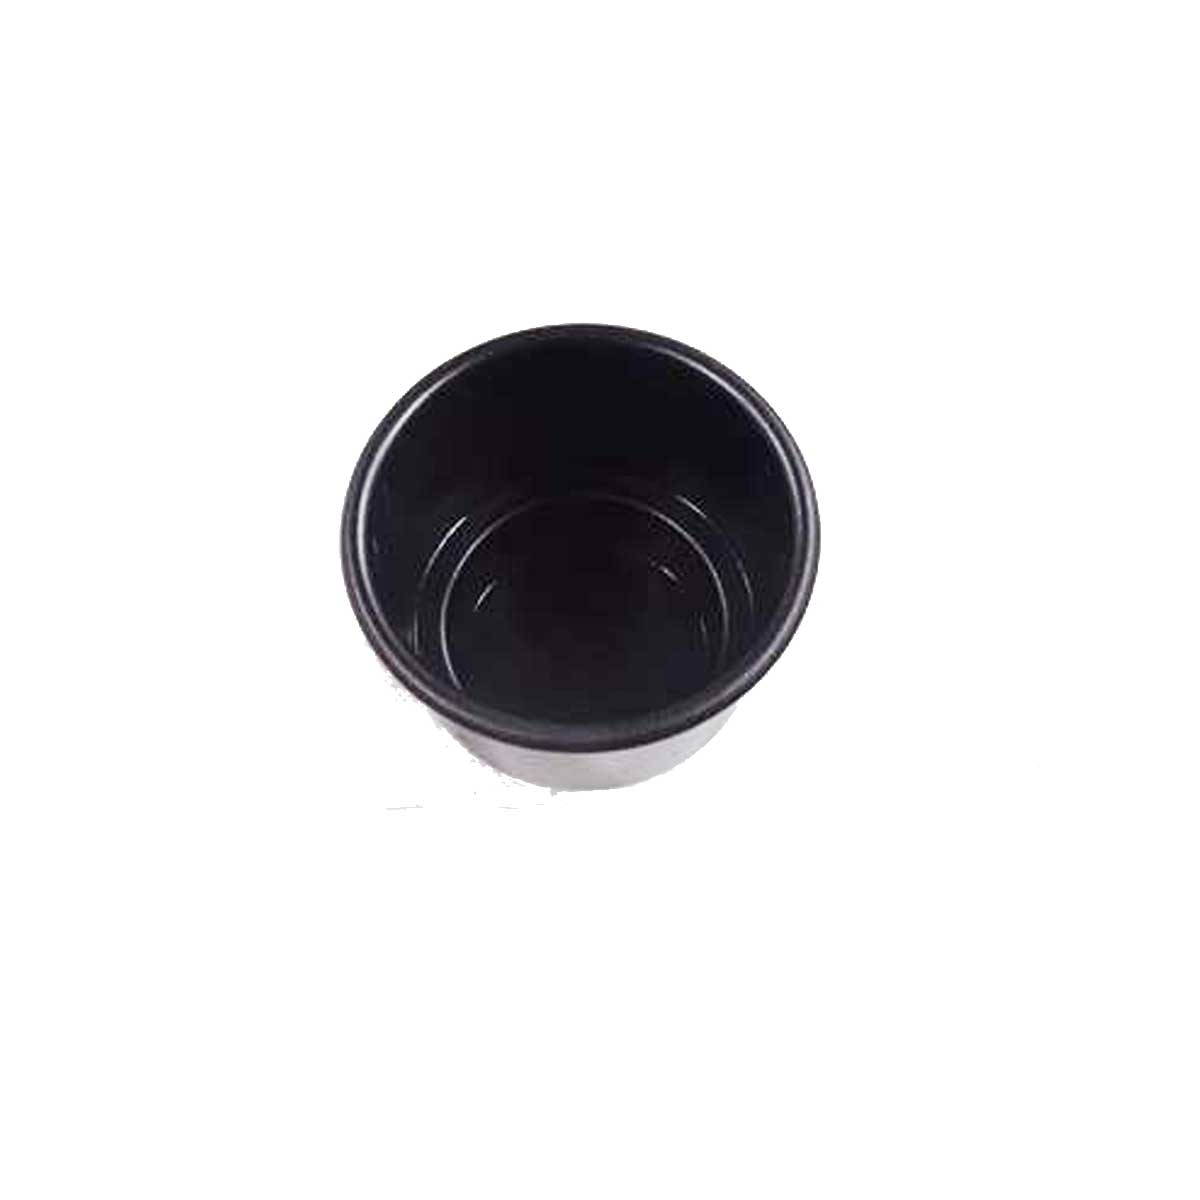 Axis Jumbo Cup Holder - Black - 5546003